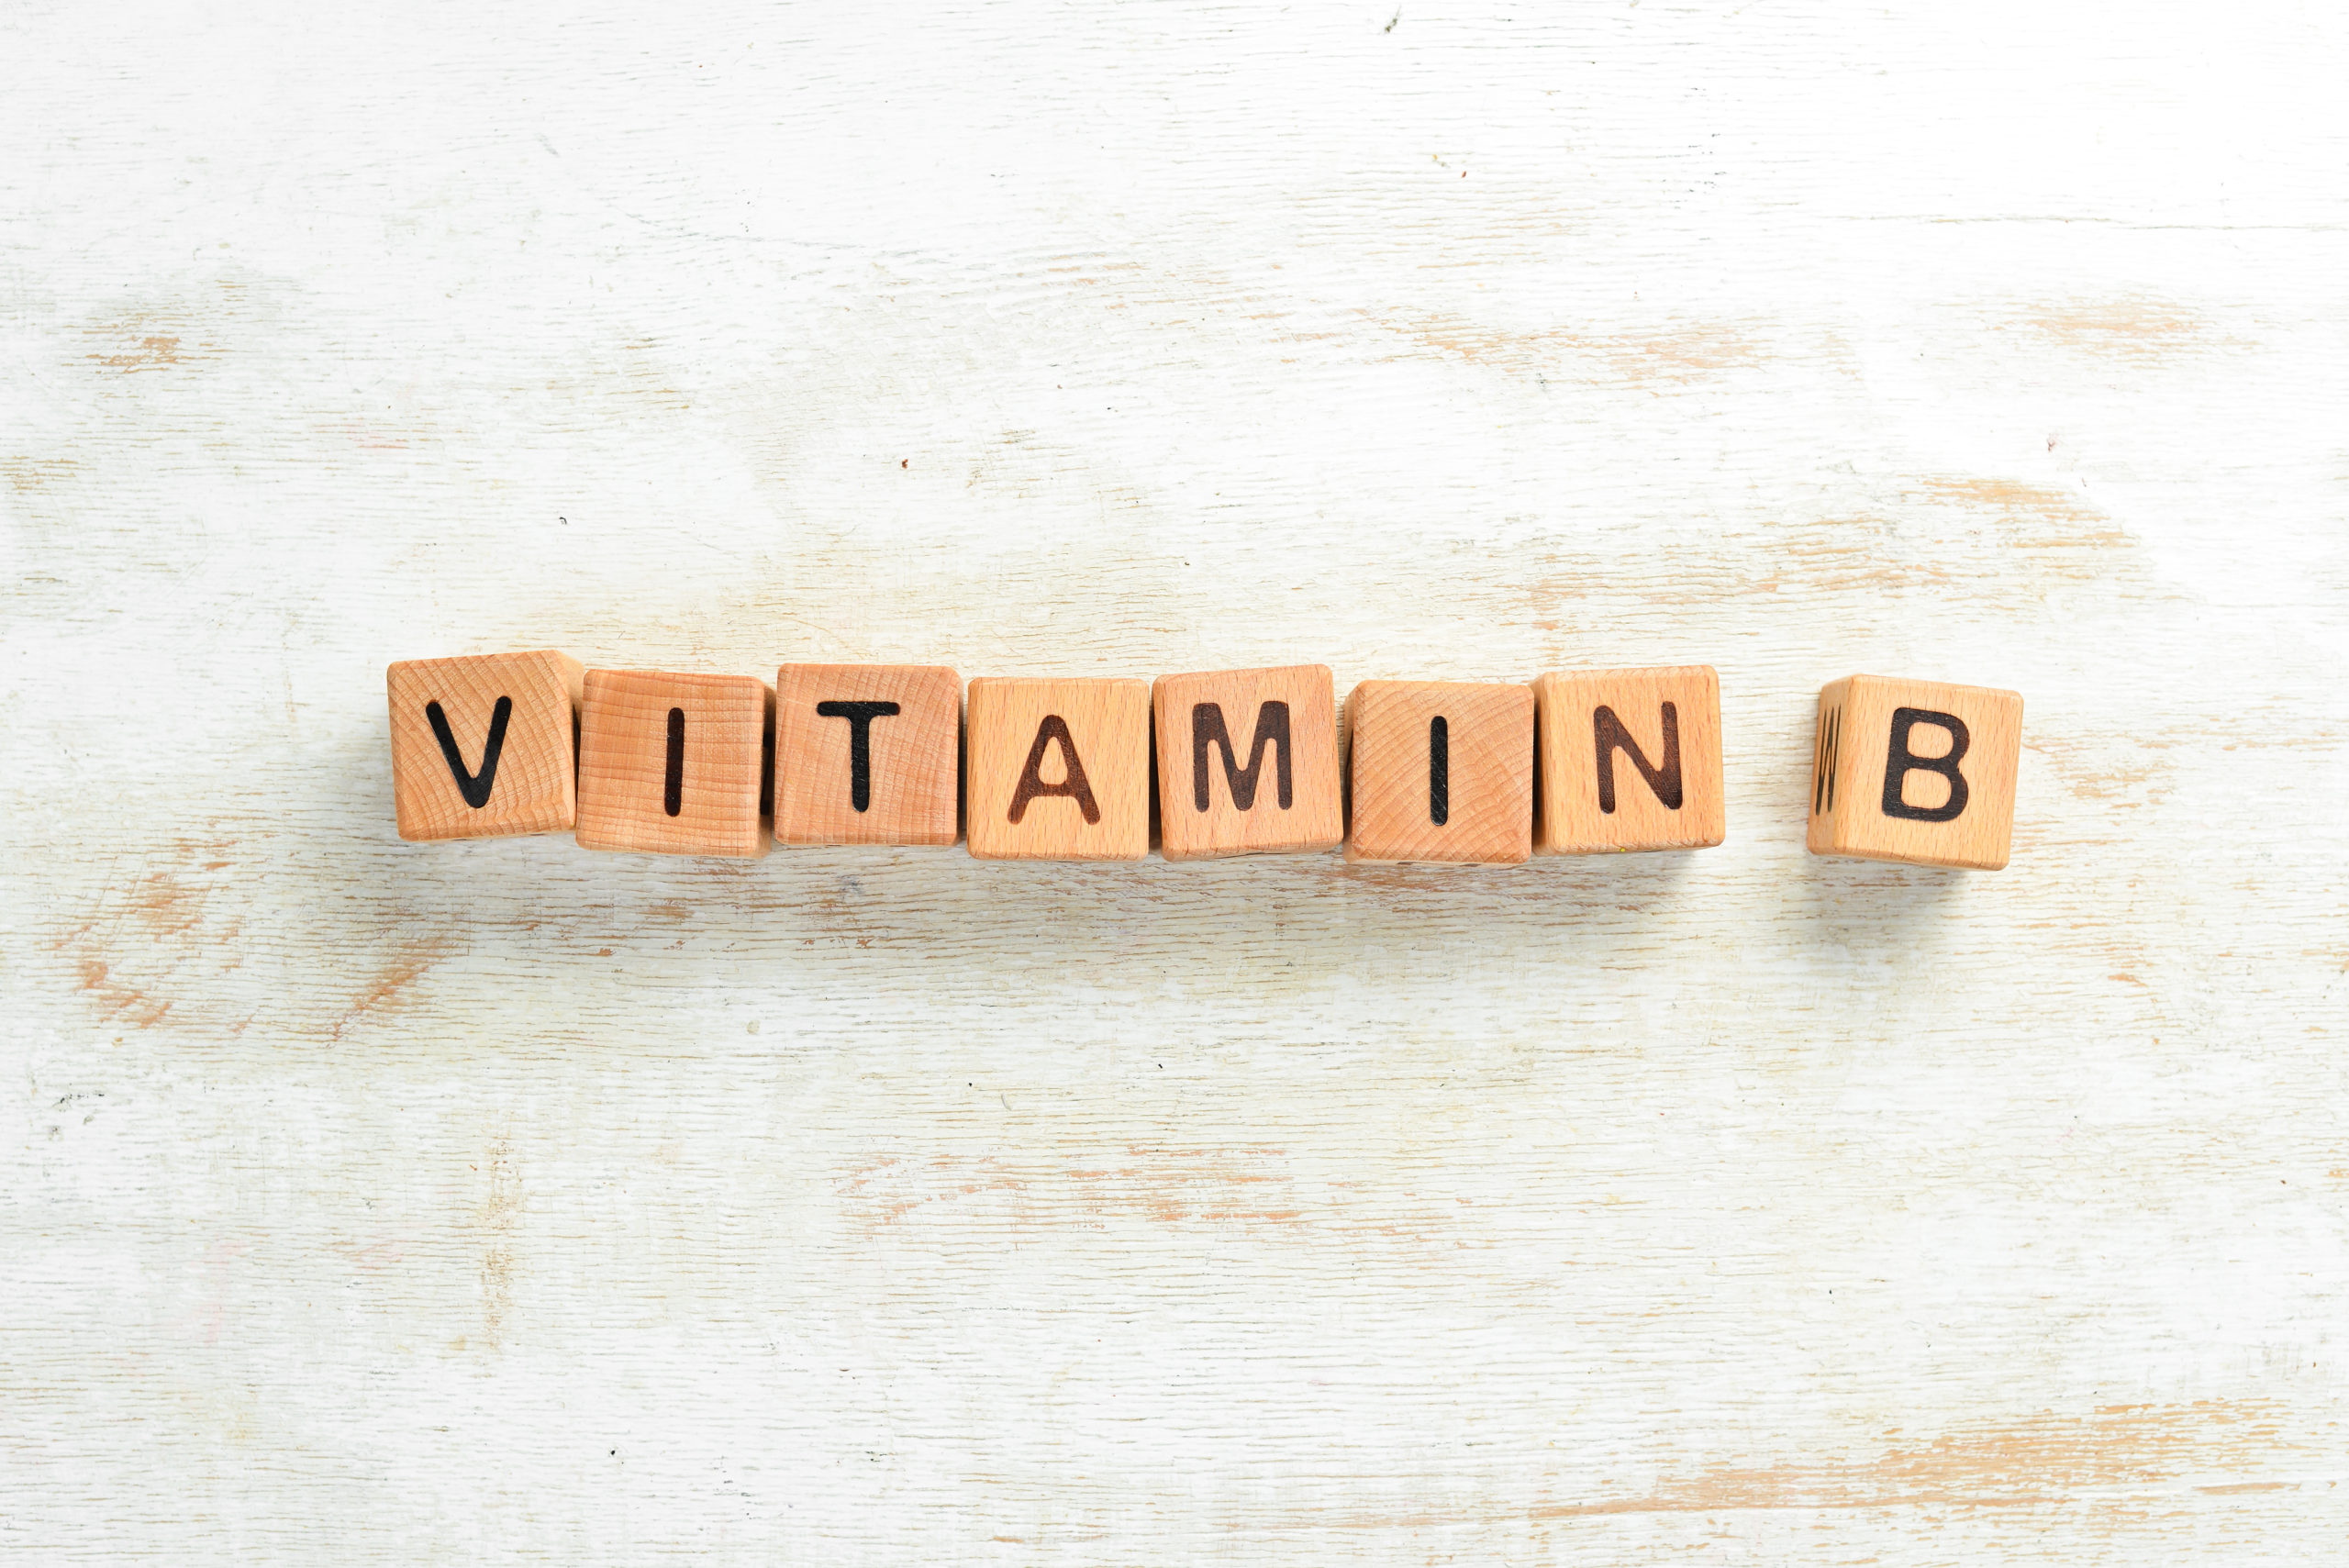 pomanjkanje vitamina B